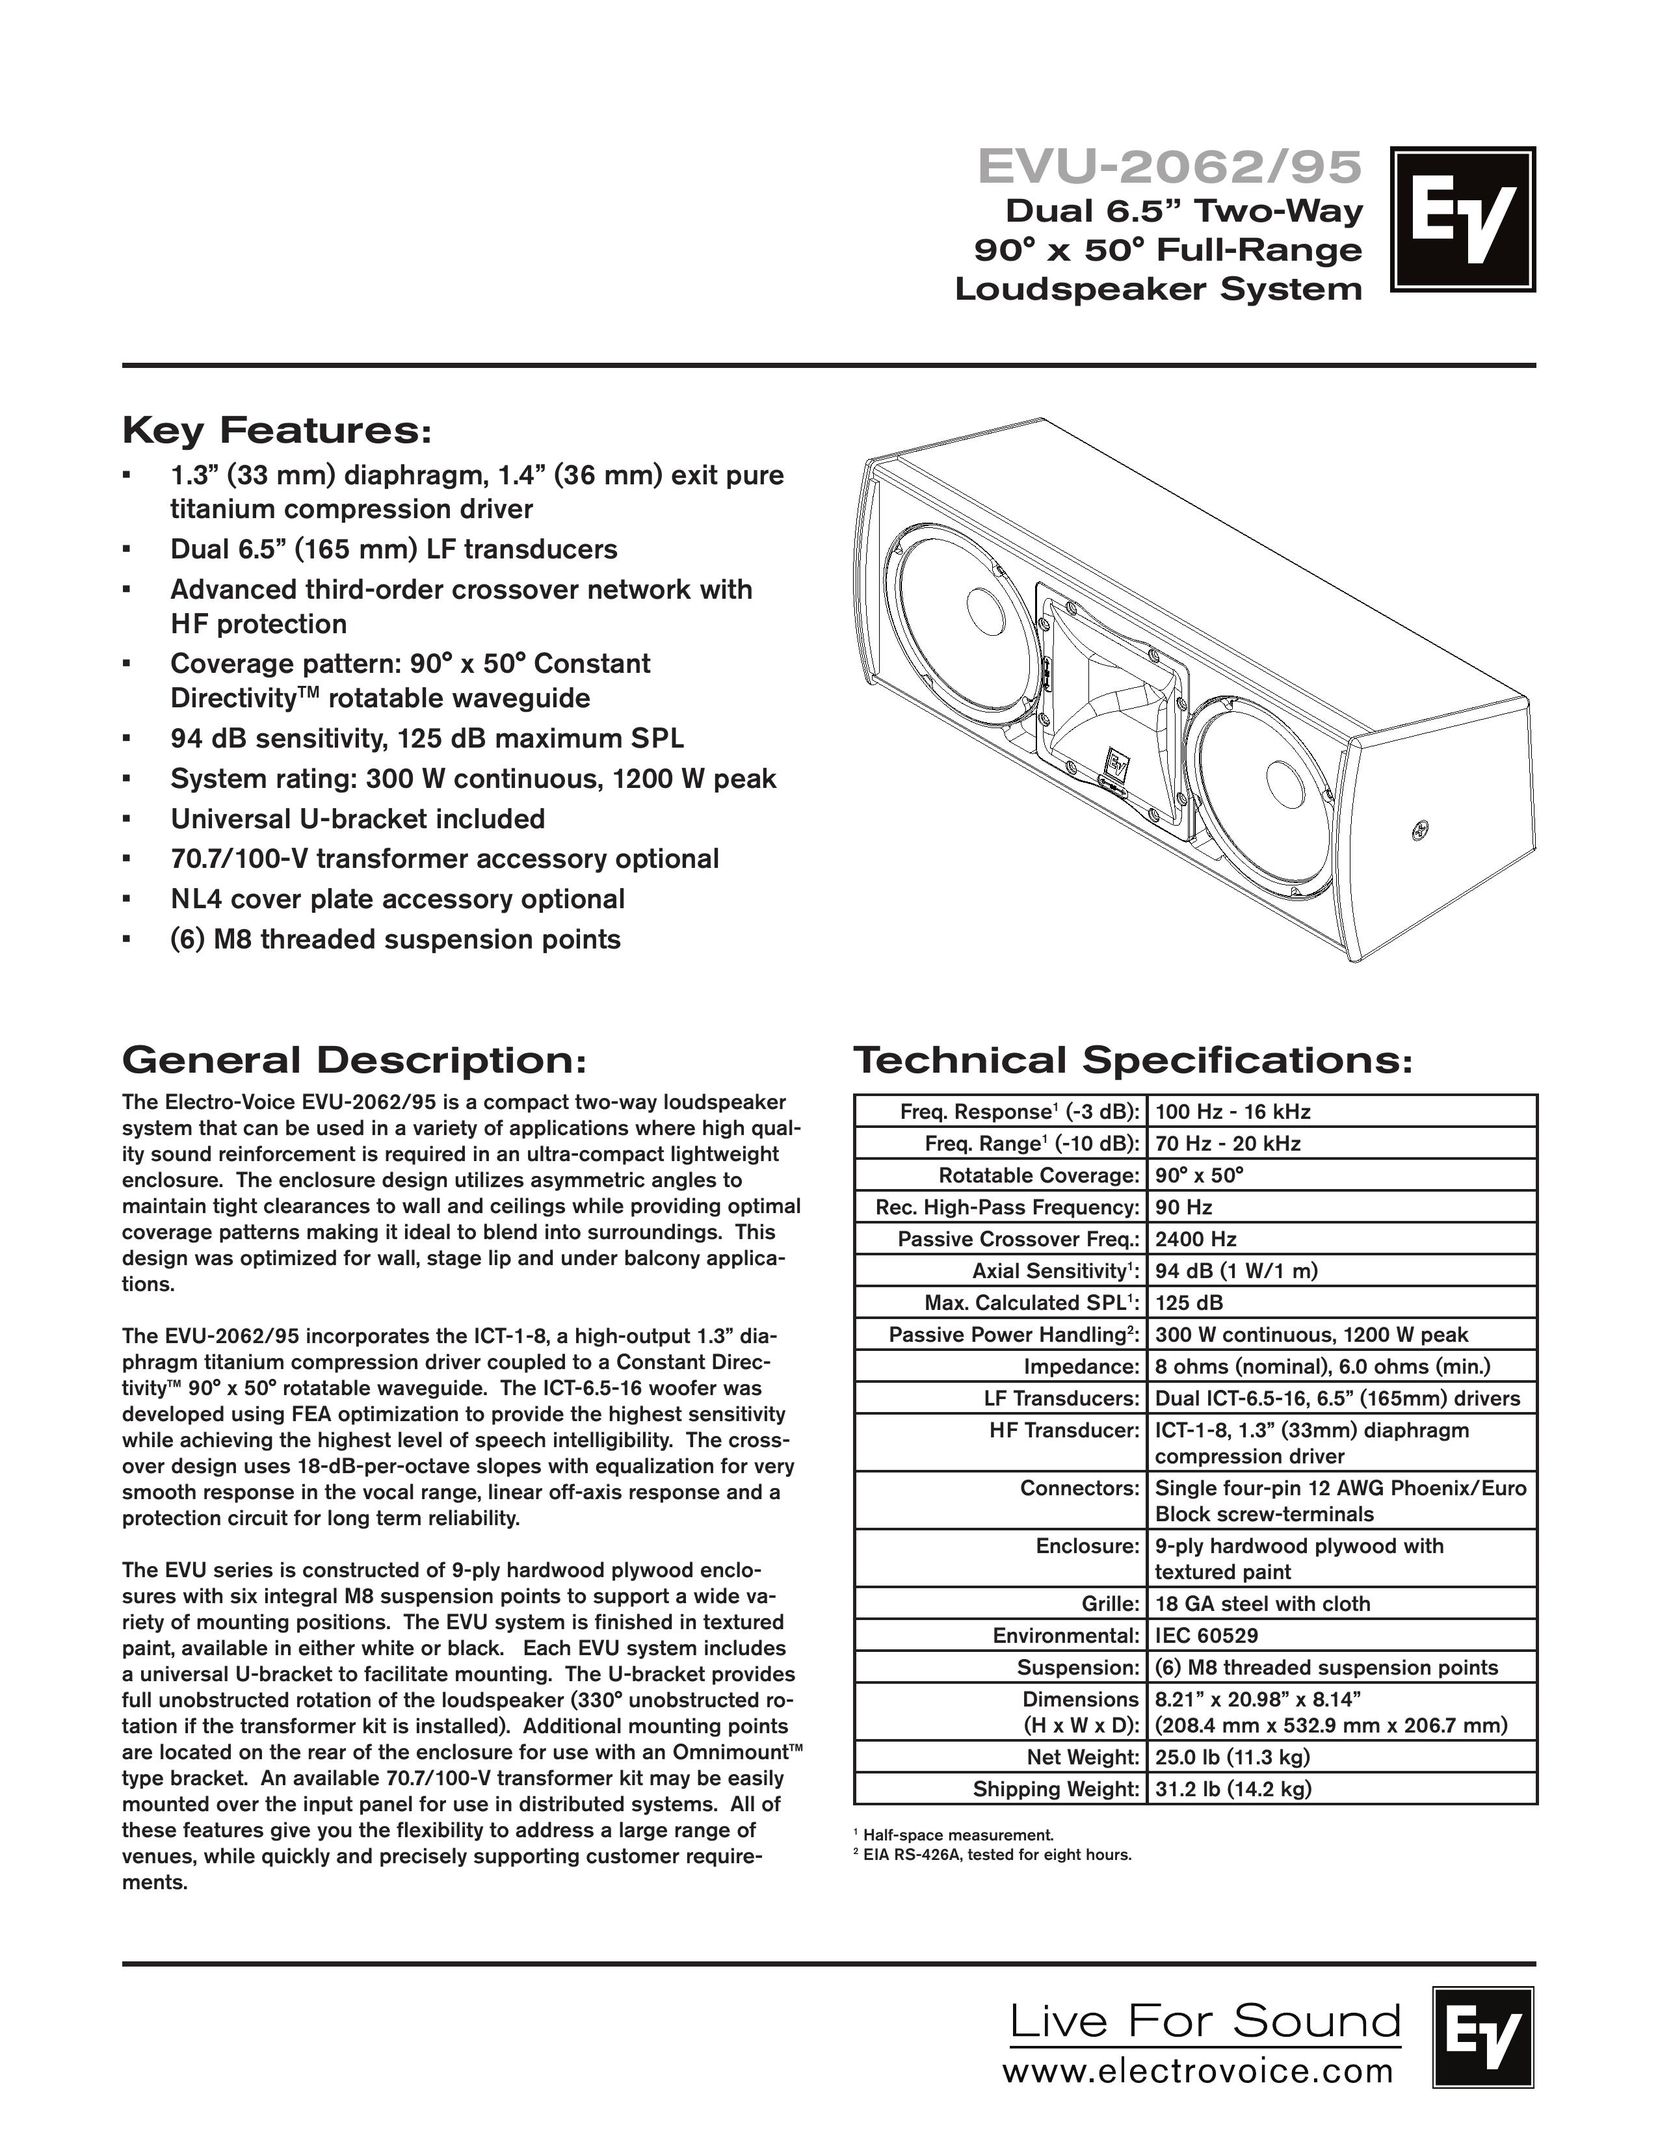 Electro-Voice EVU-2062/95 Car Speaker User Manual